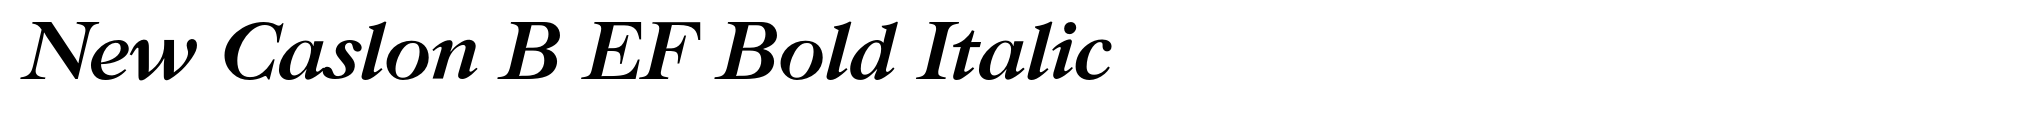 New Caslon B EF Bold Italic image